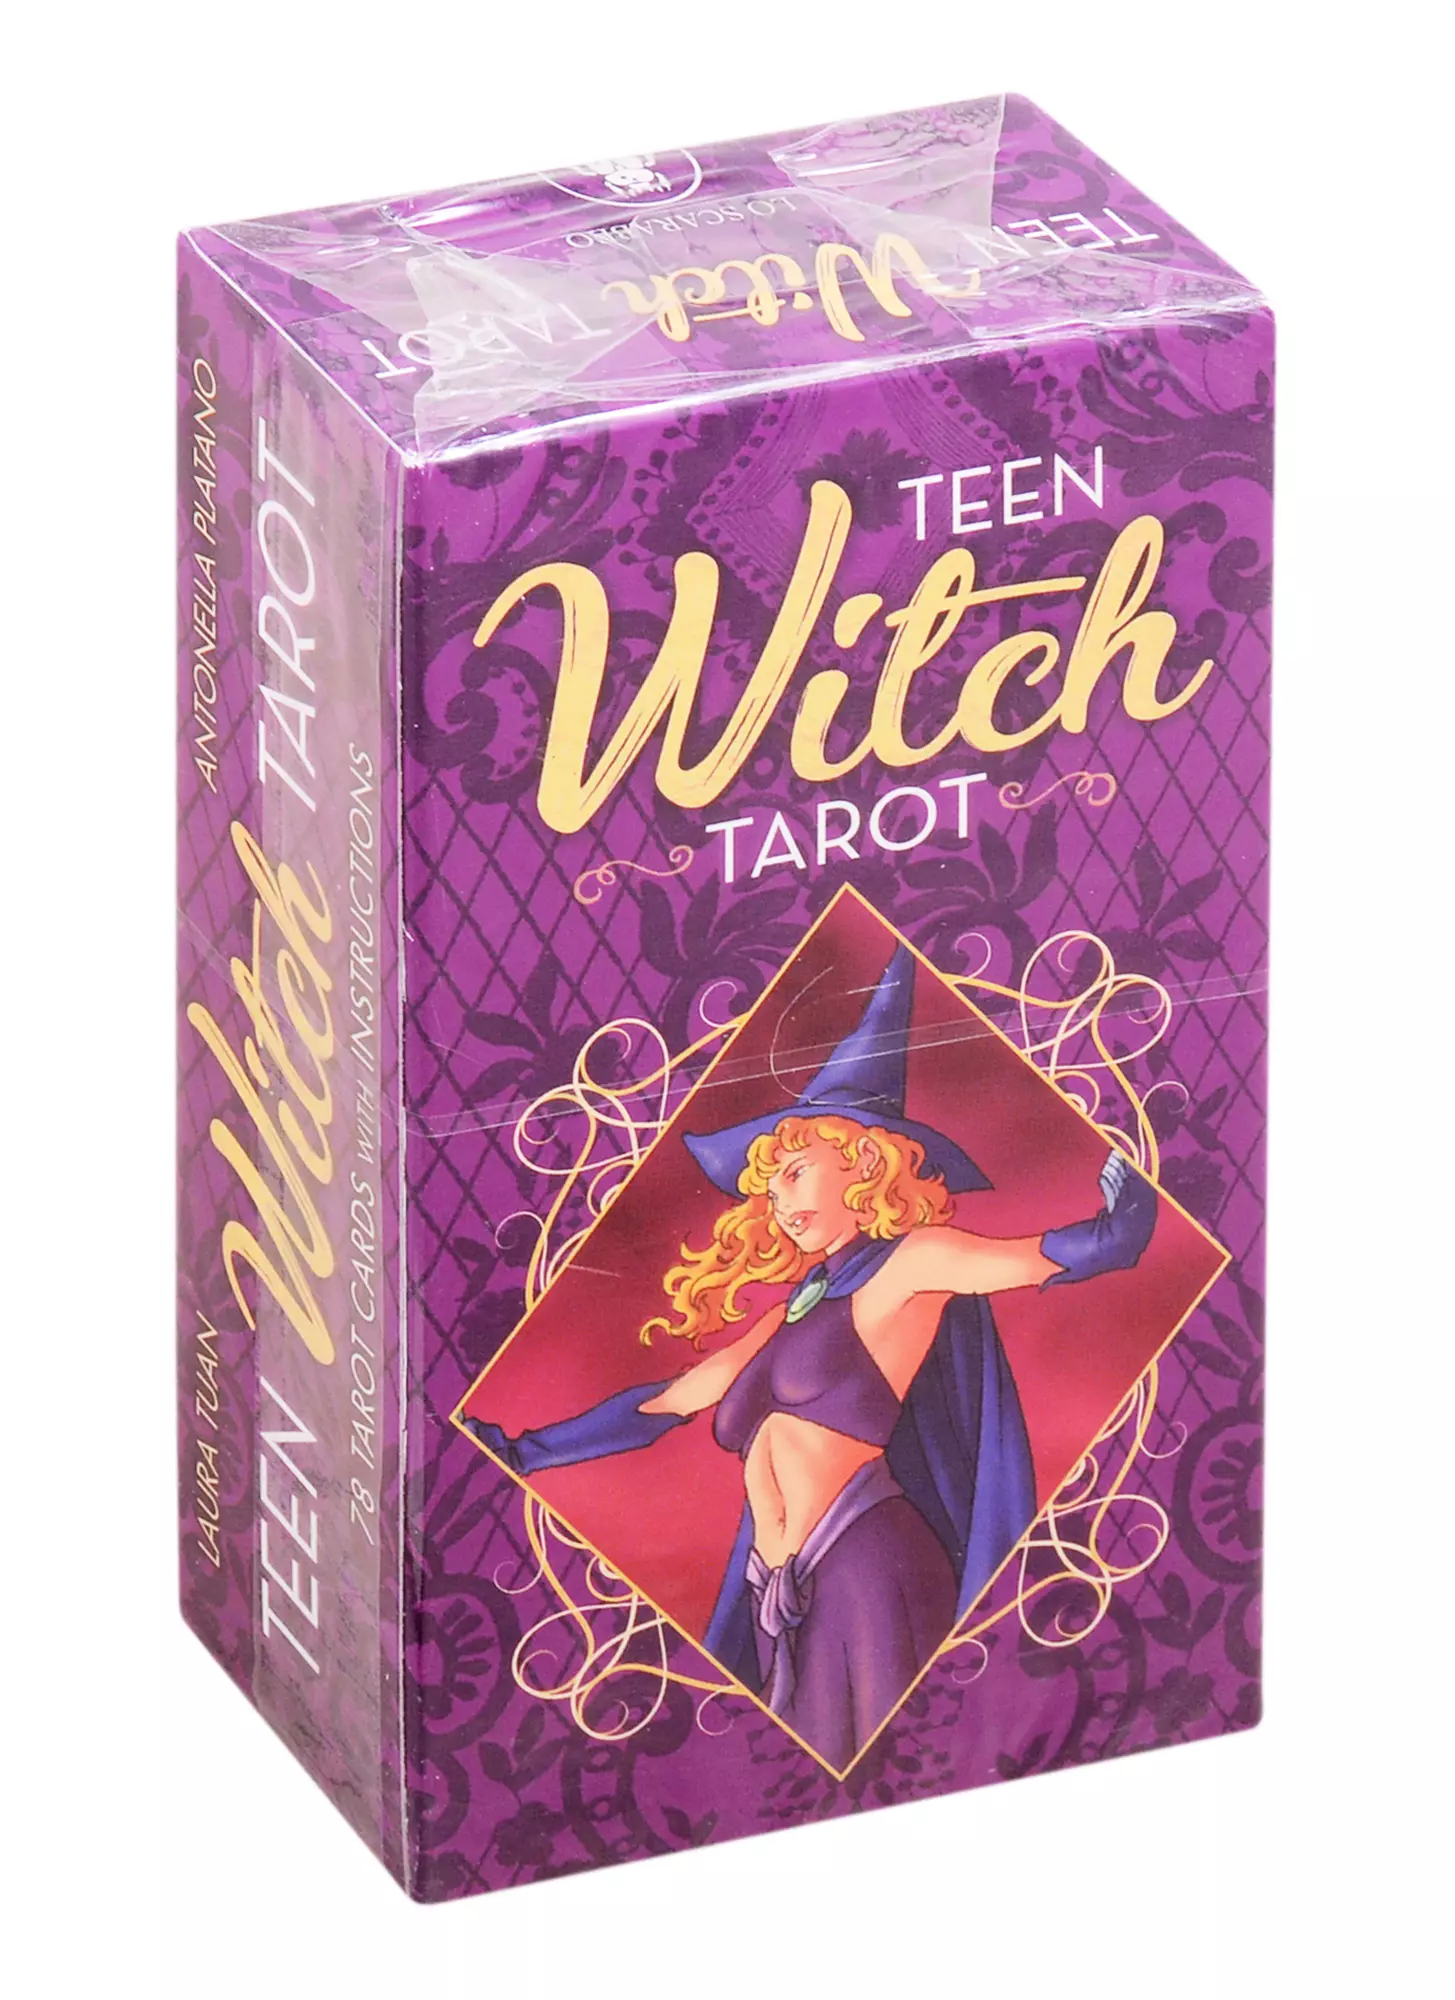 Таро Юных Ведьм / Teen Witch Tarot (78 Tarot Cards With Instructions) карты teen witch tarot таро юных ведьм lo scarabeo